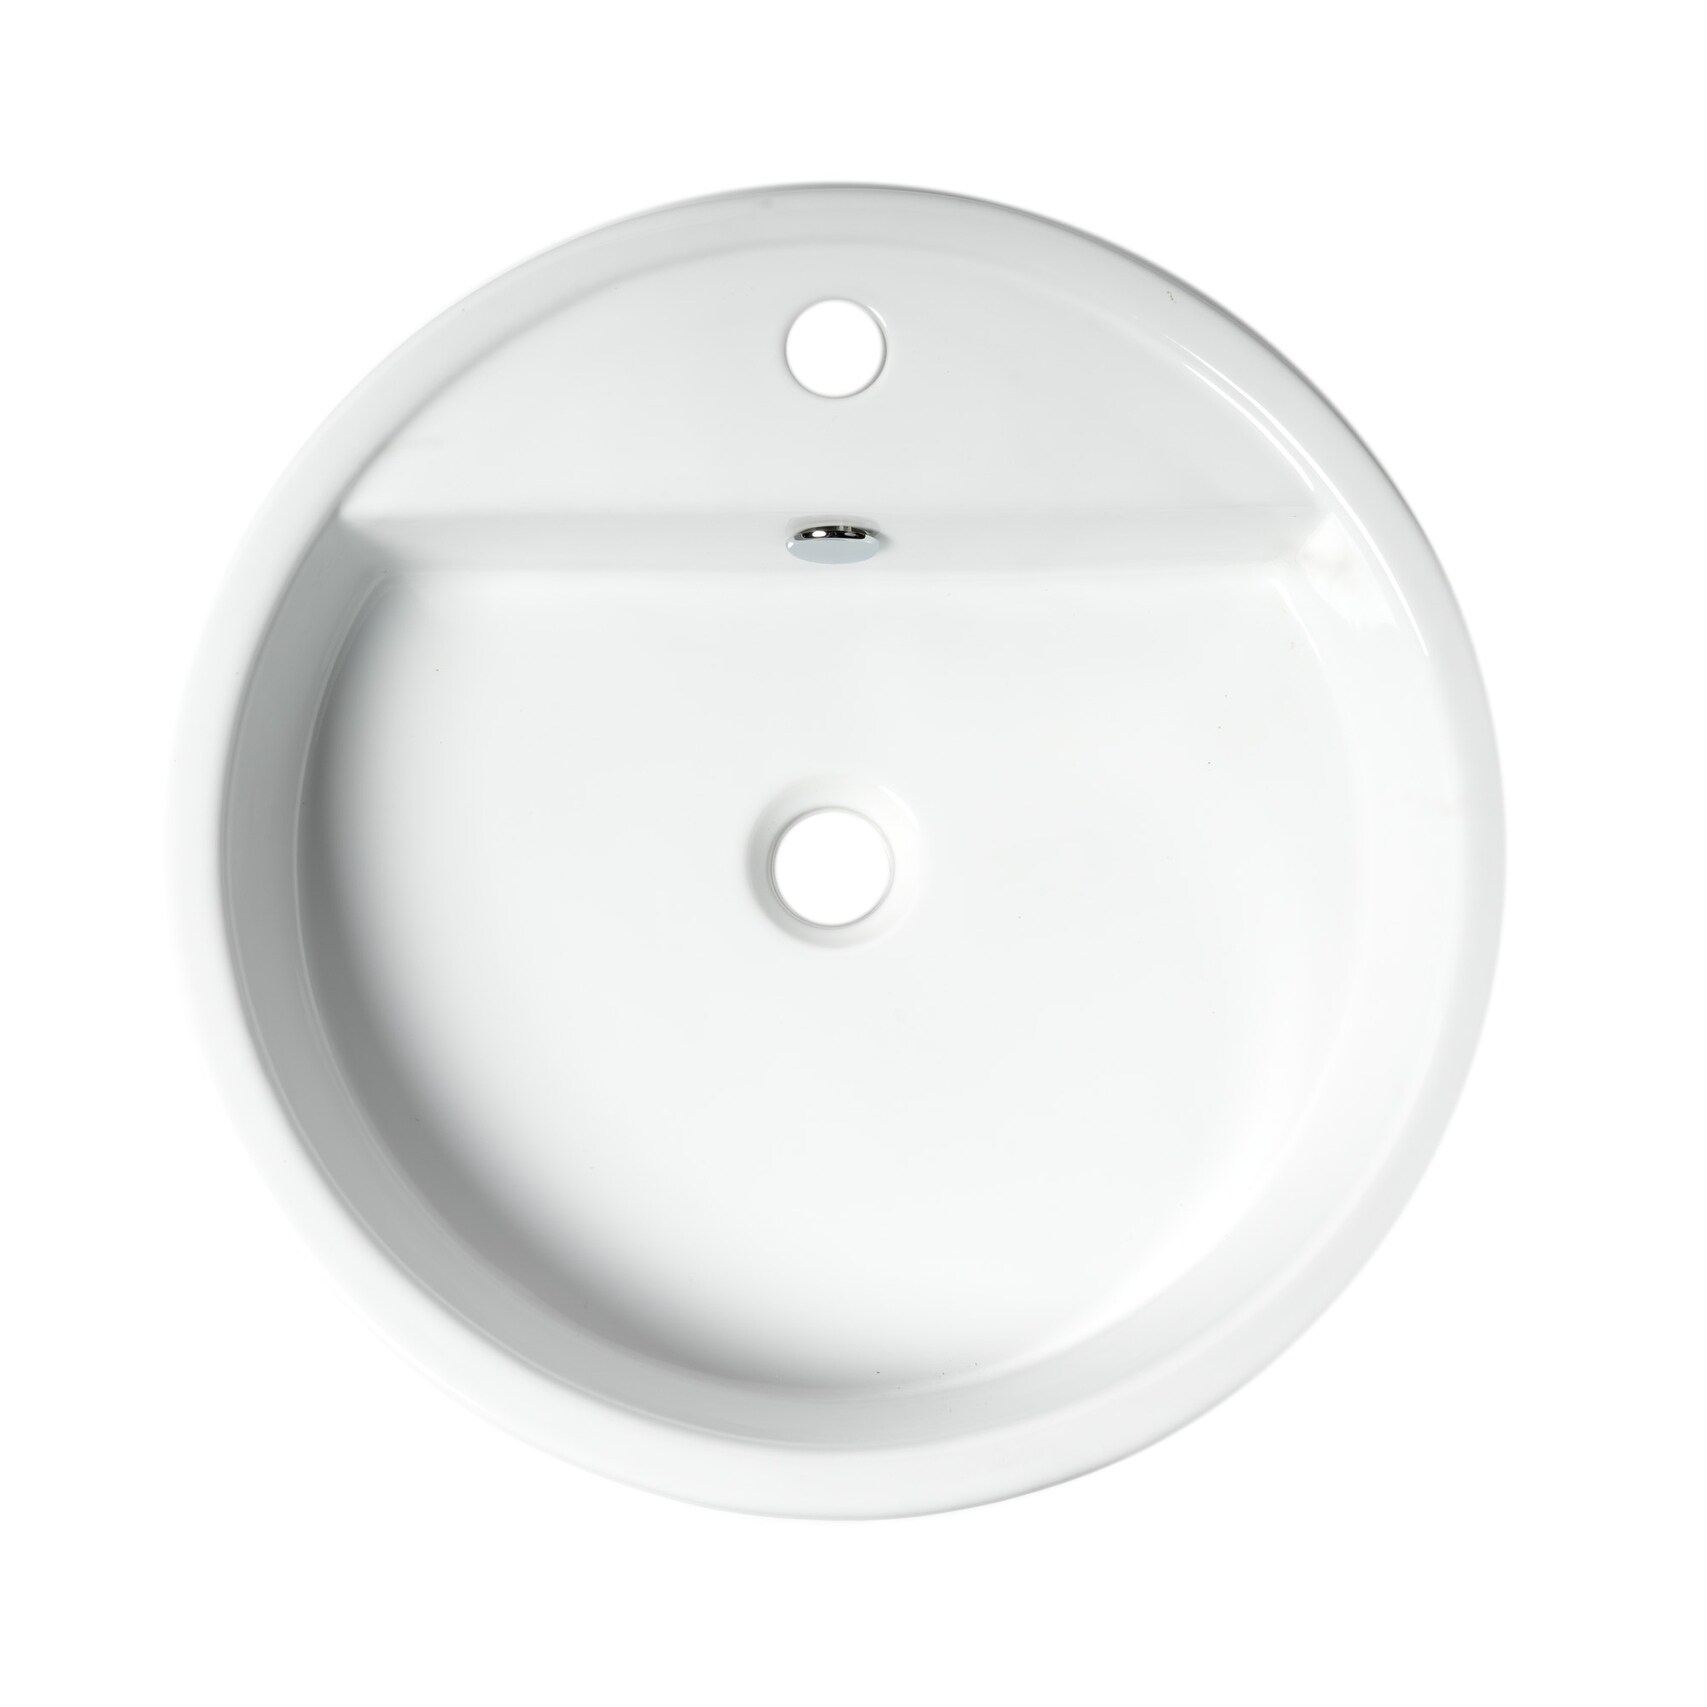 ALFI brand White 19" Round Semi Recessed Ceramic Sink with Faucet Hole